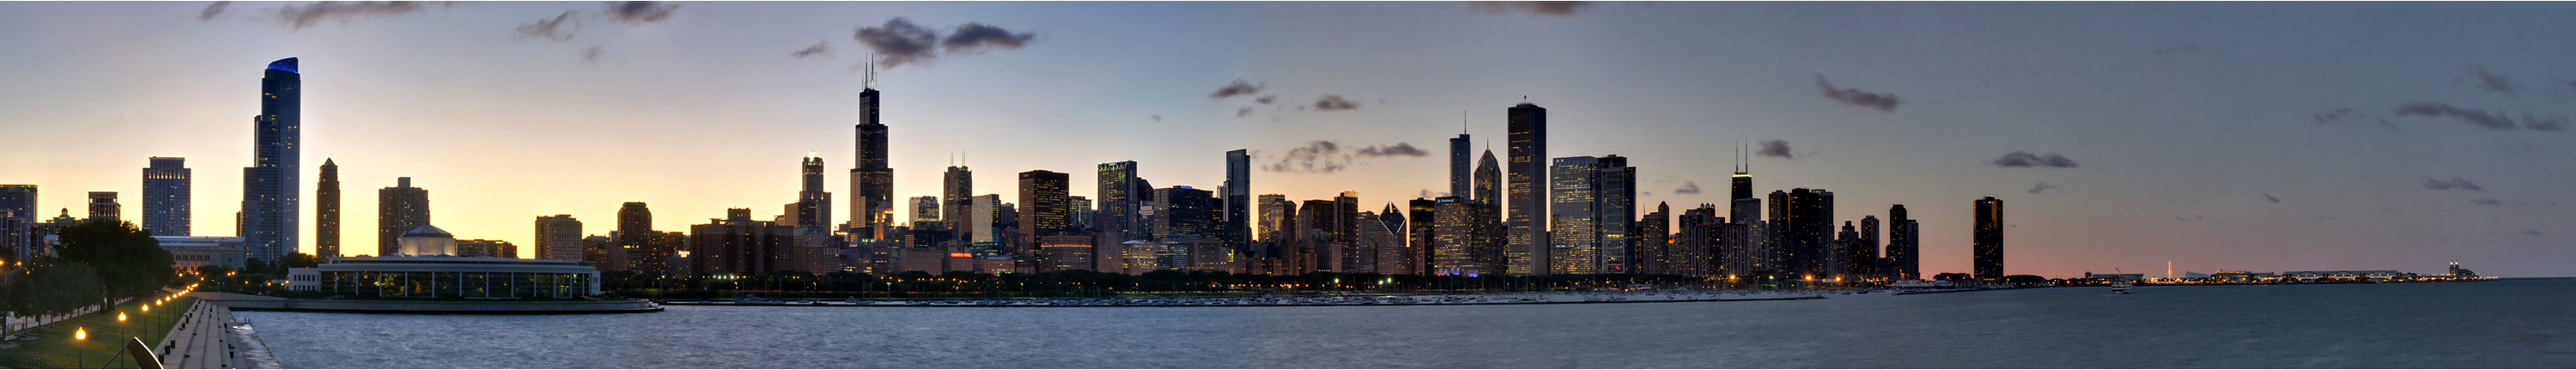 Sonnenuntergang in Chicago